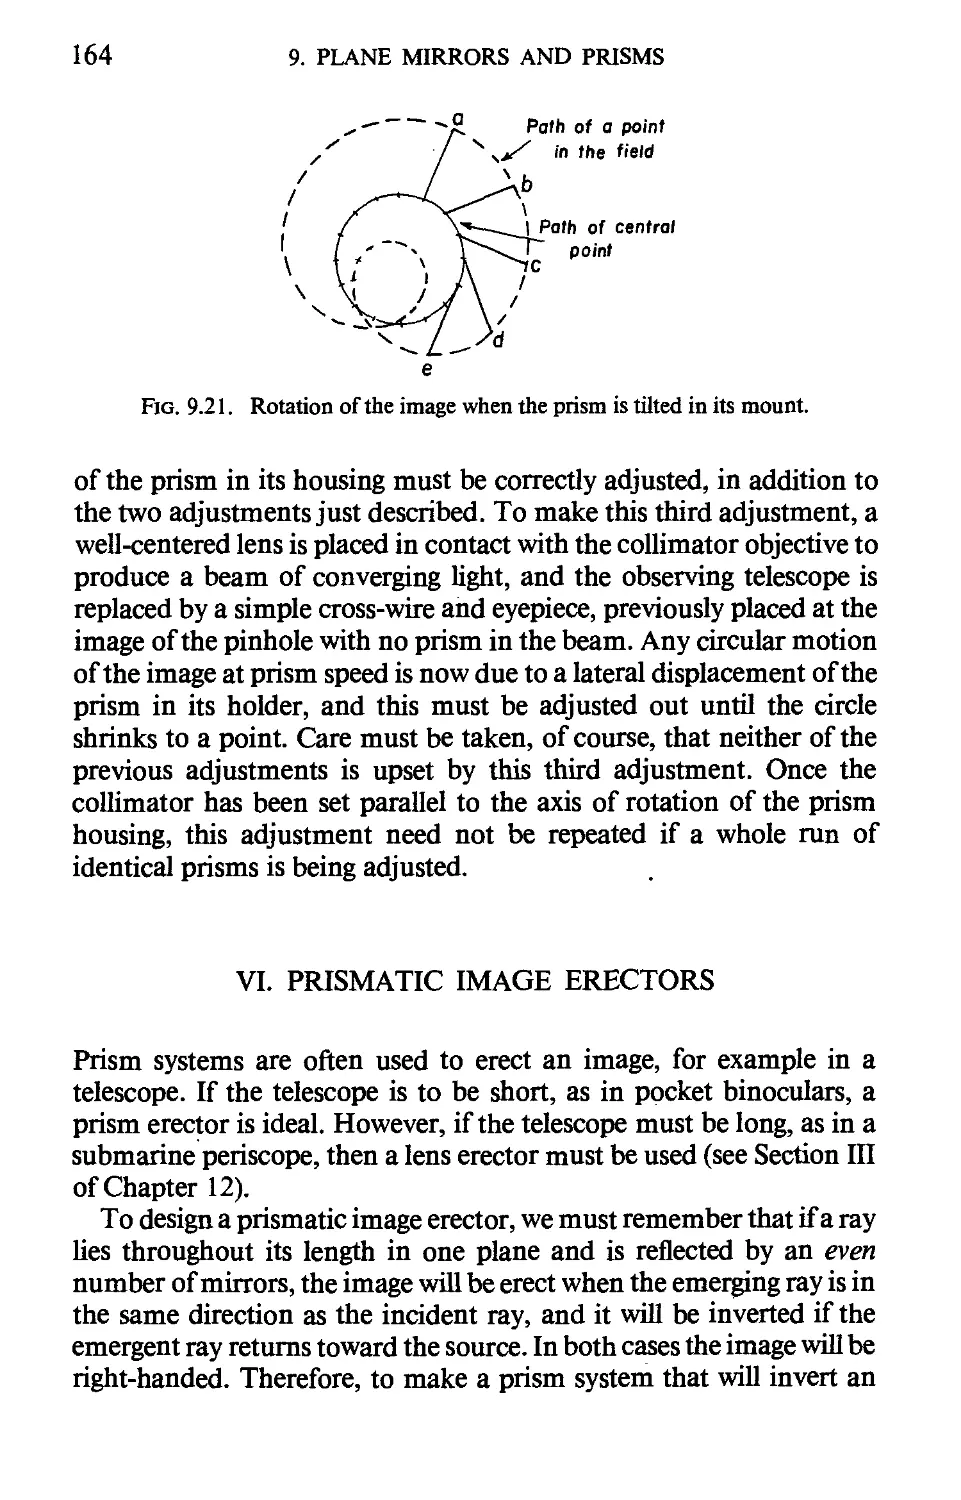 VI. Prismatic Image Erectors